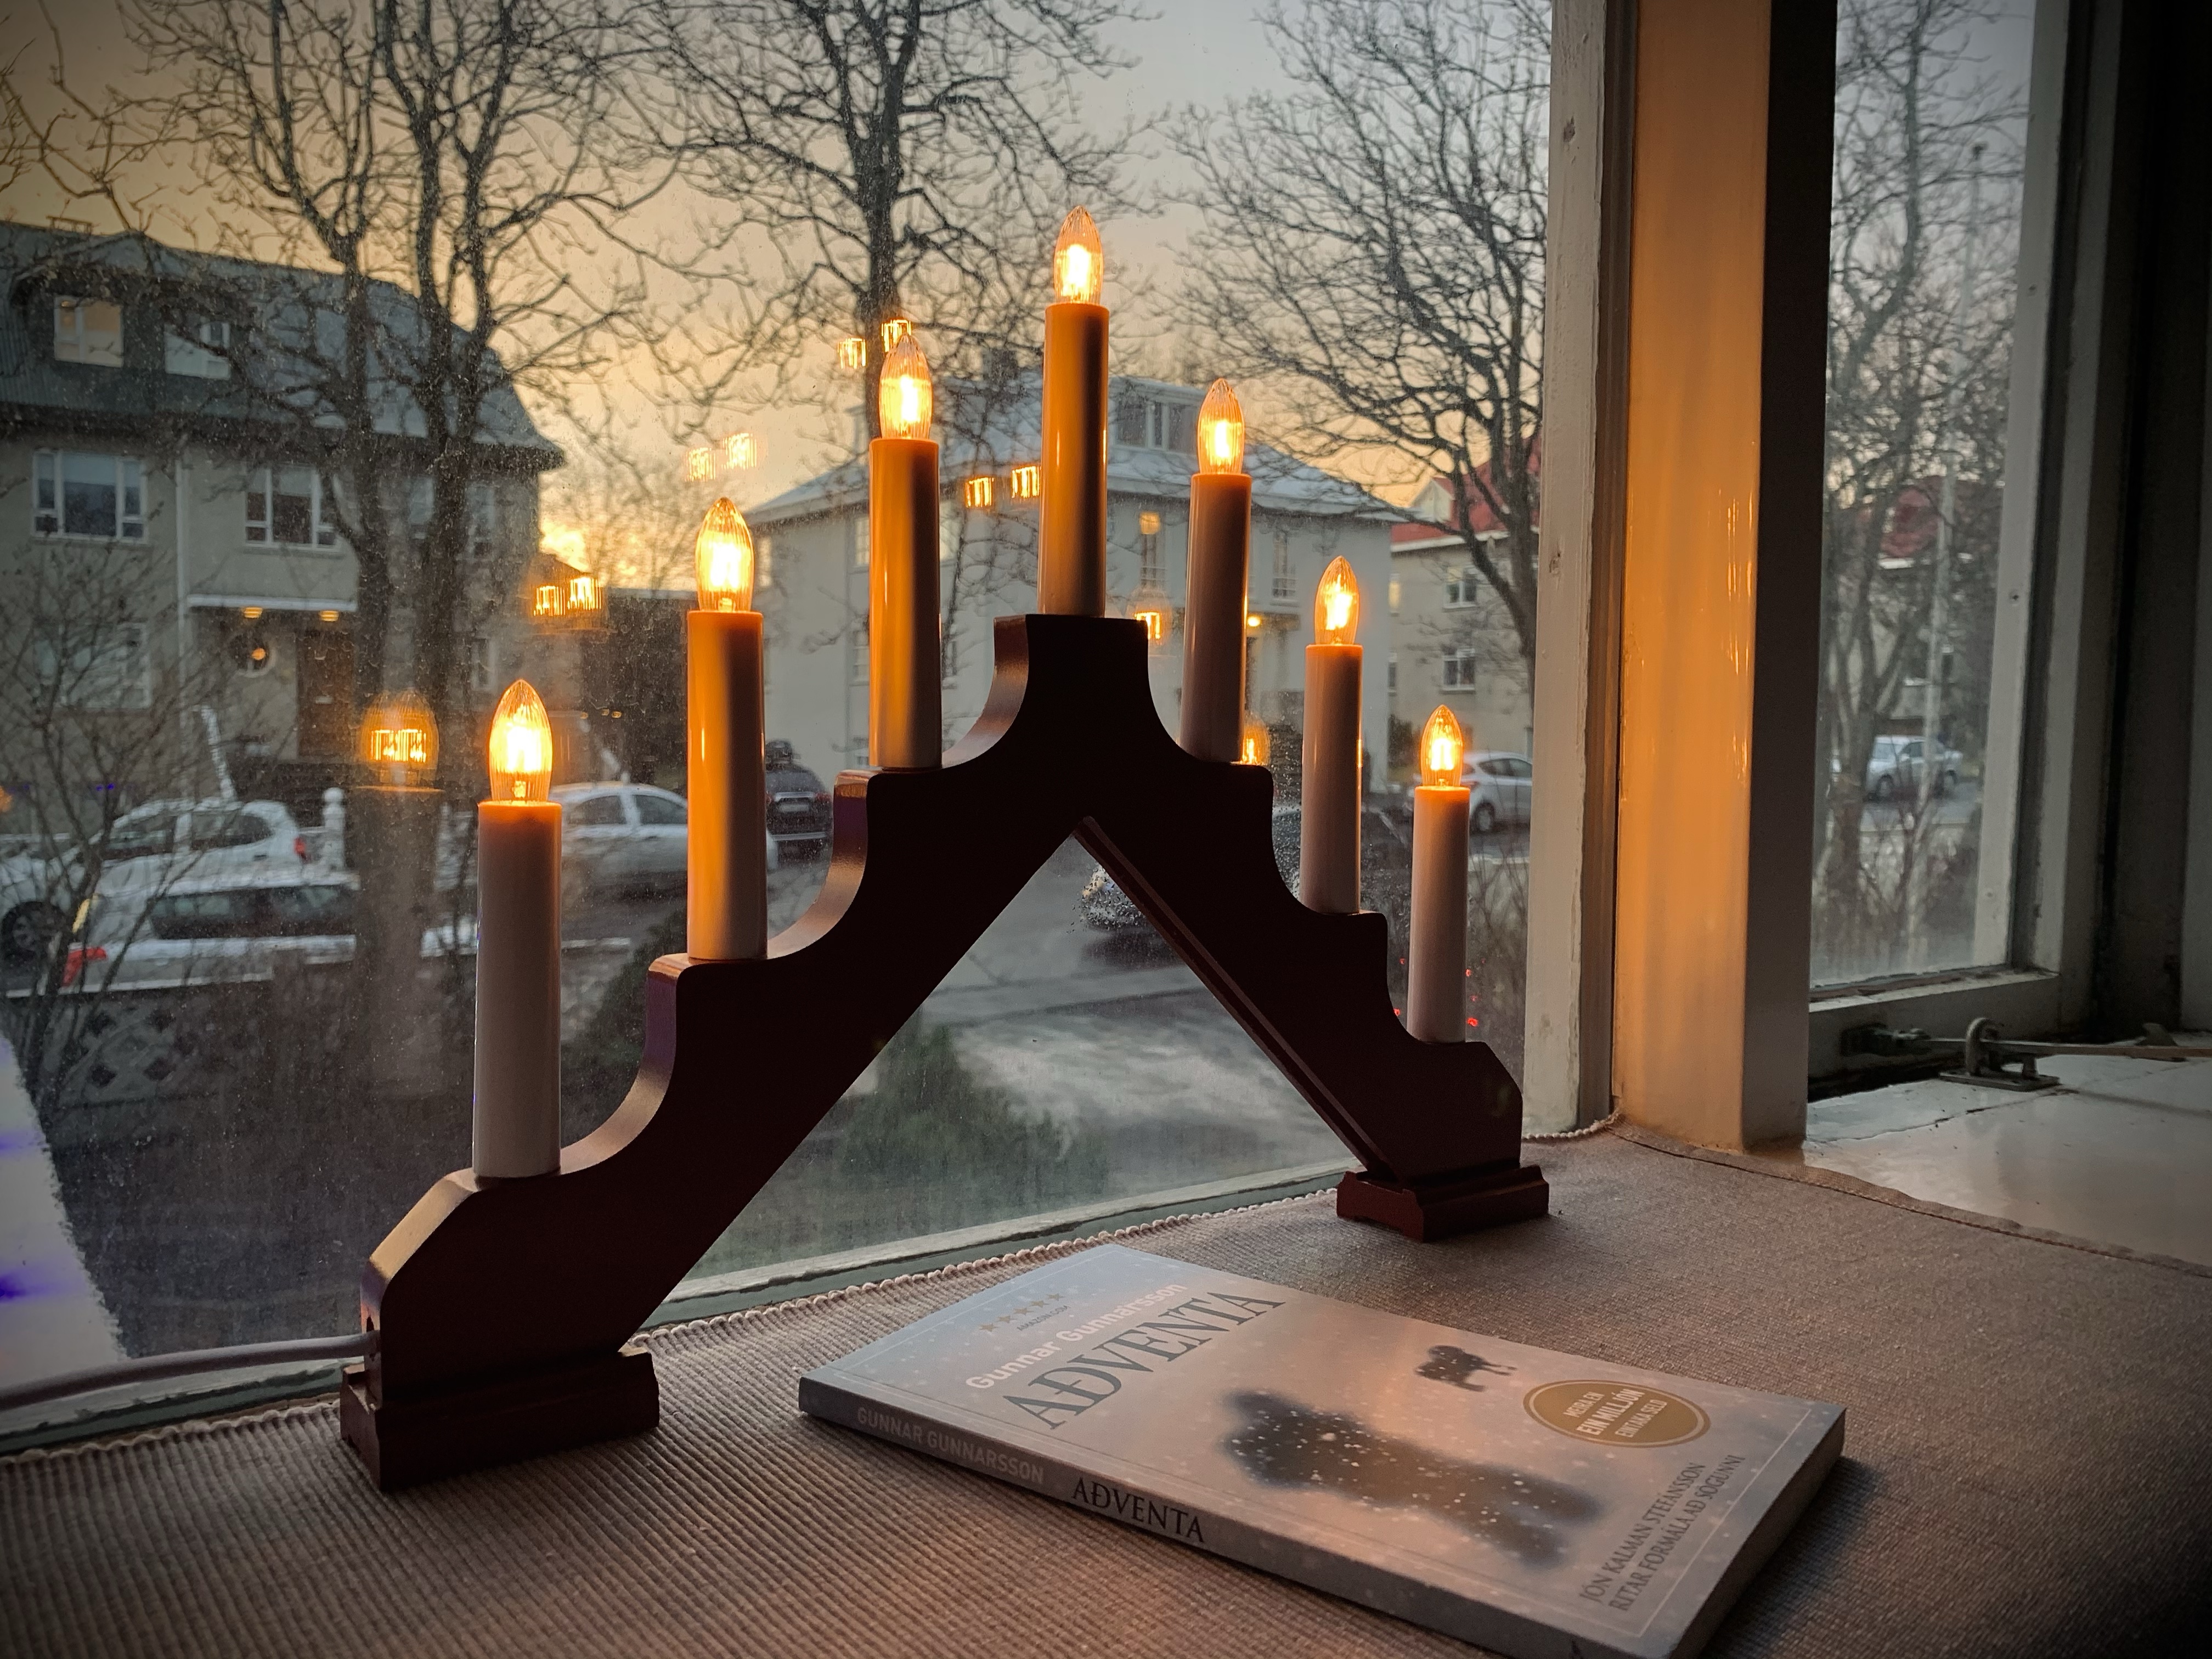 Aðventuljósin, le luci dell’Avvento in Islanda